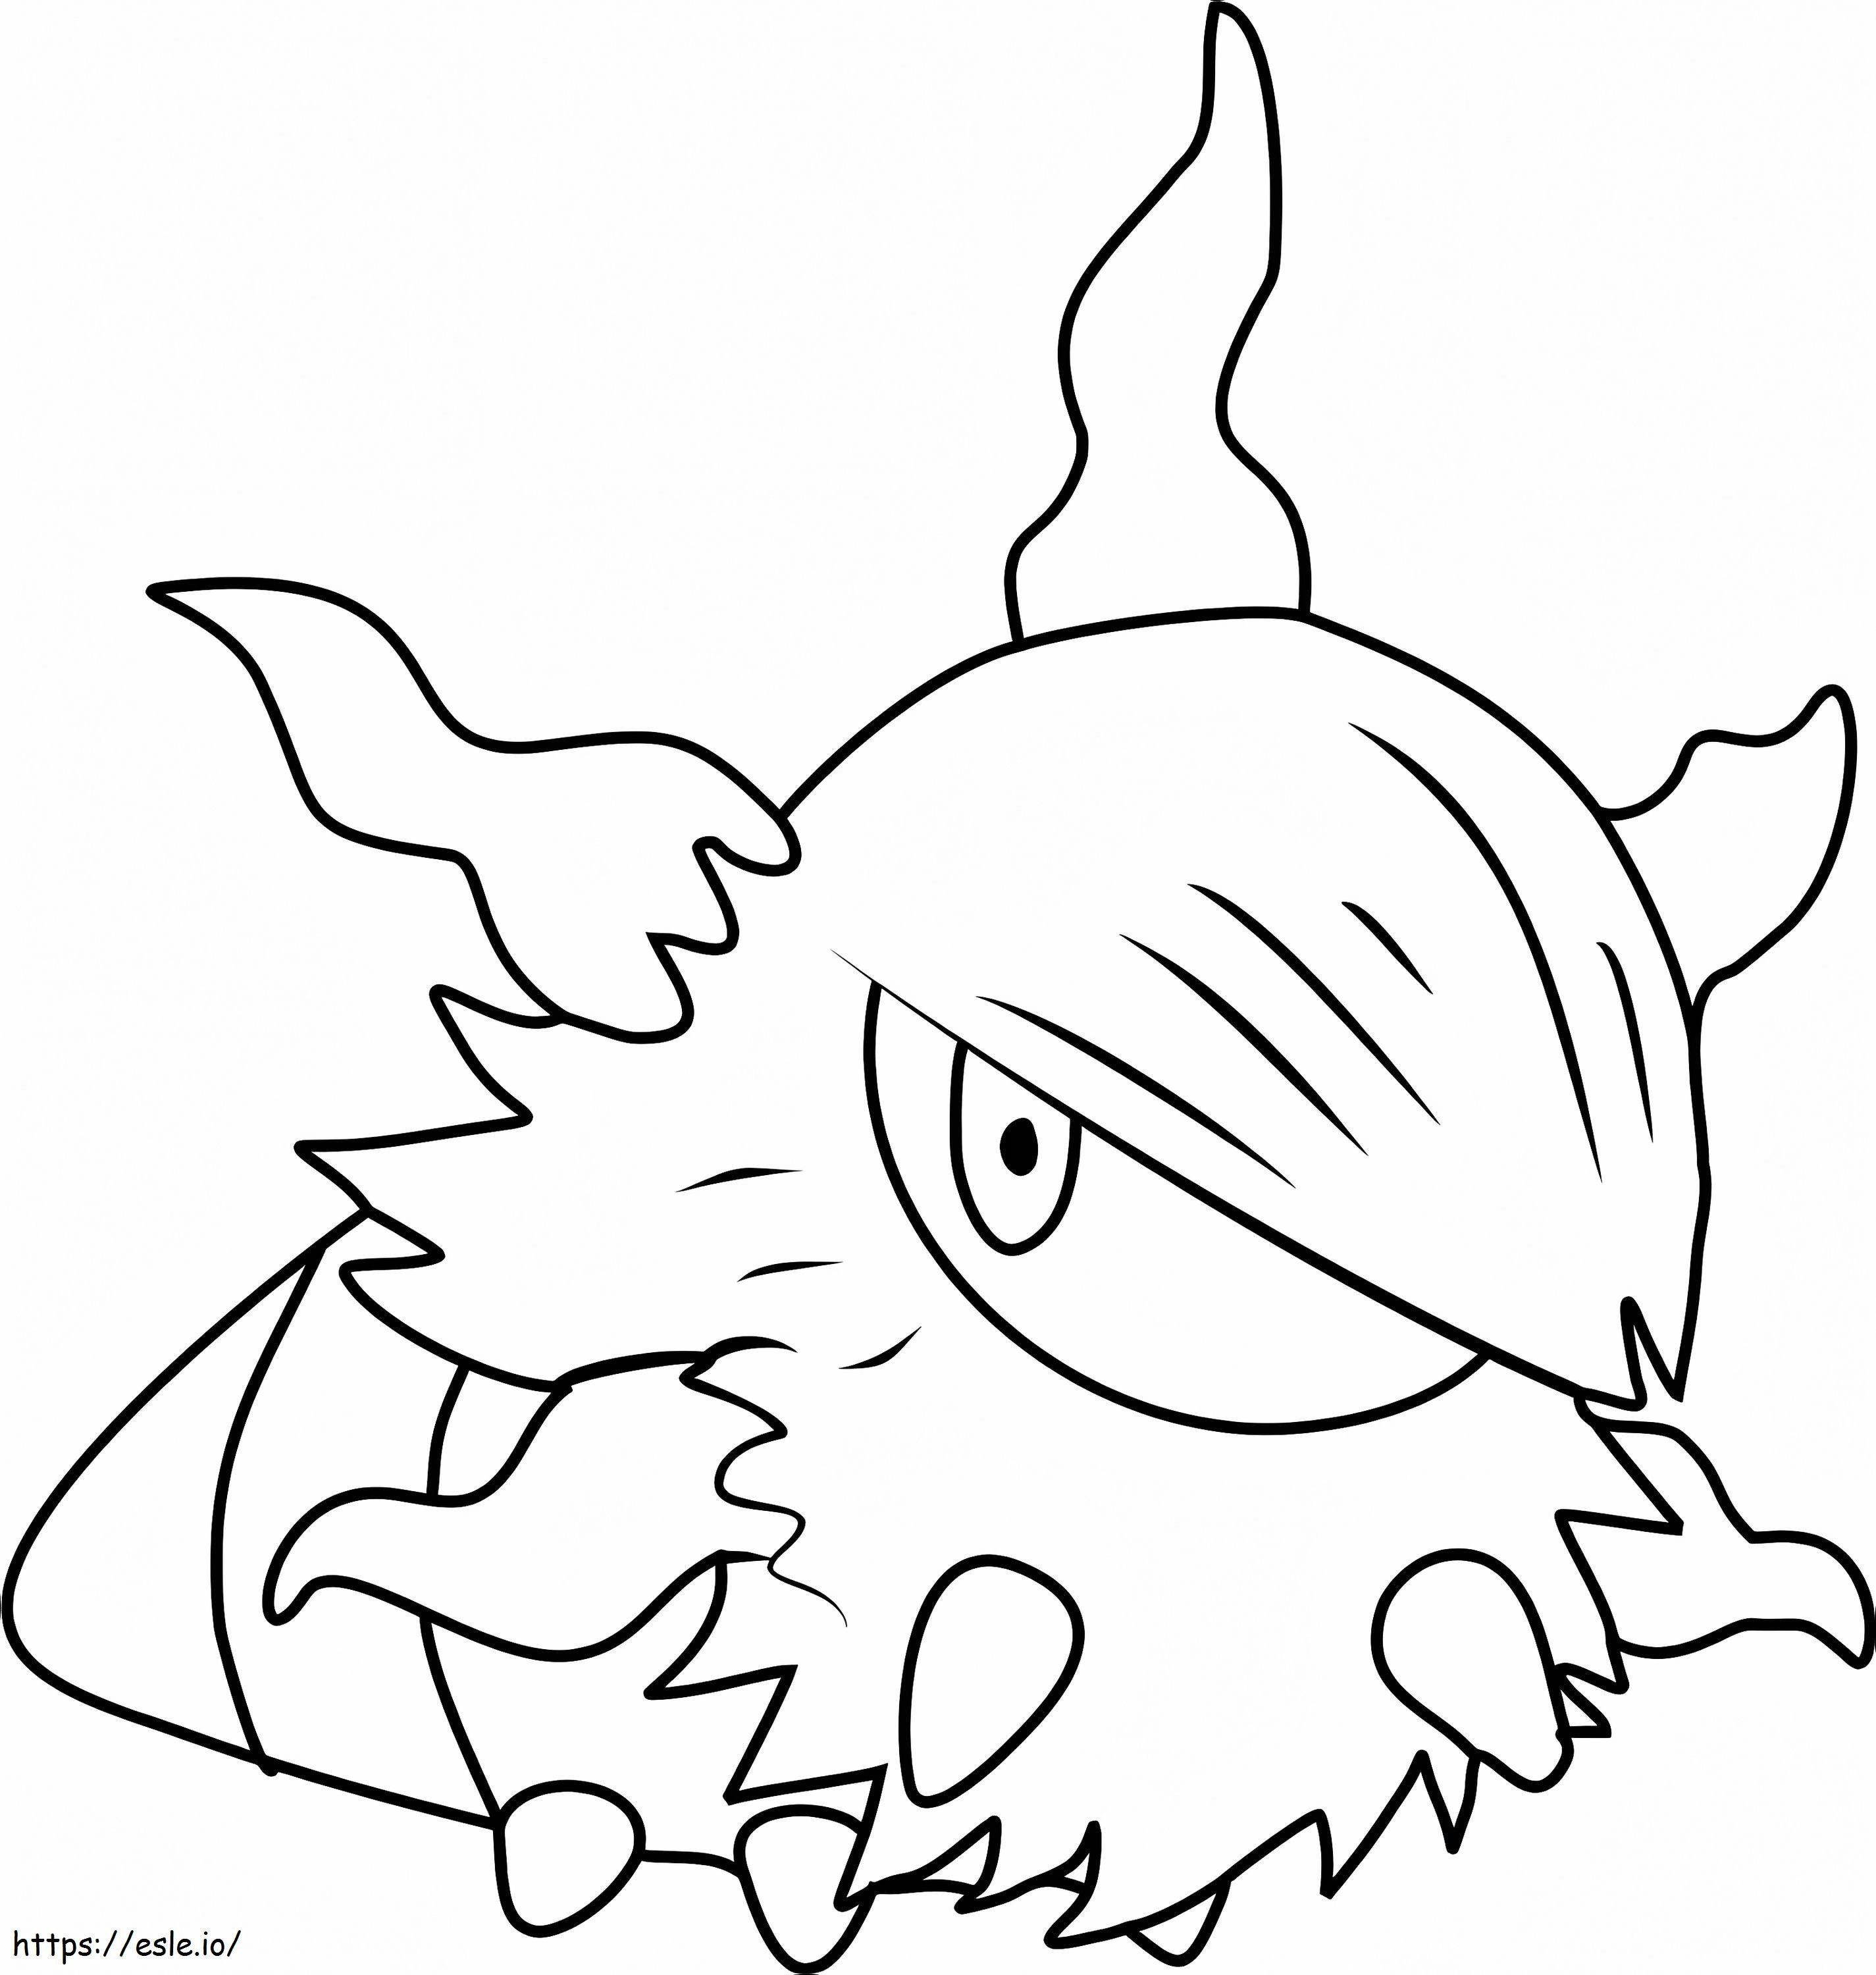 Larva Pokemon coloring page